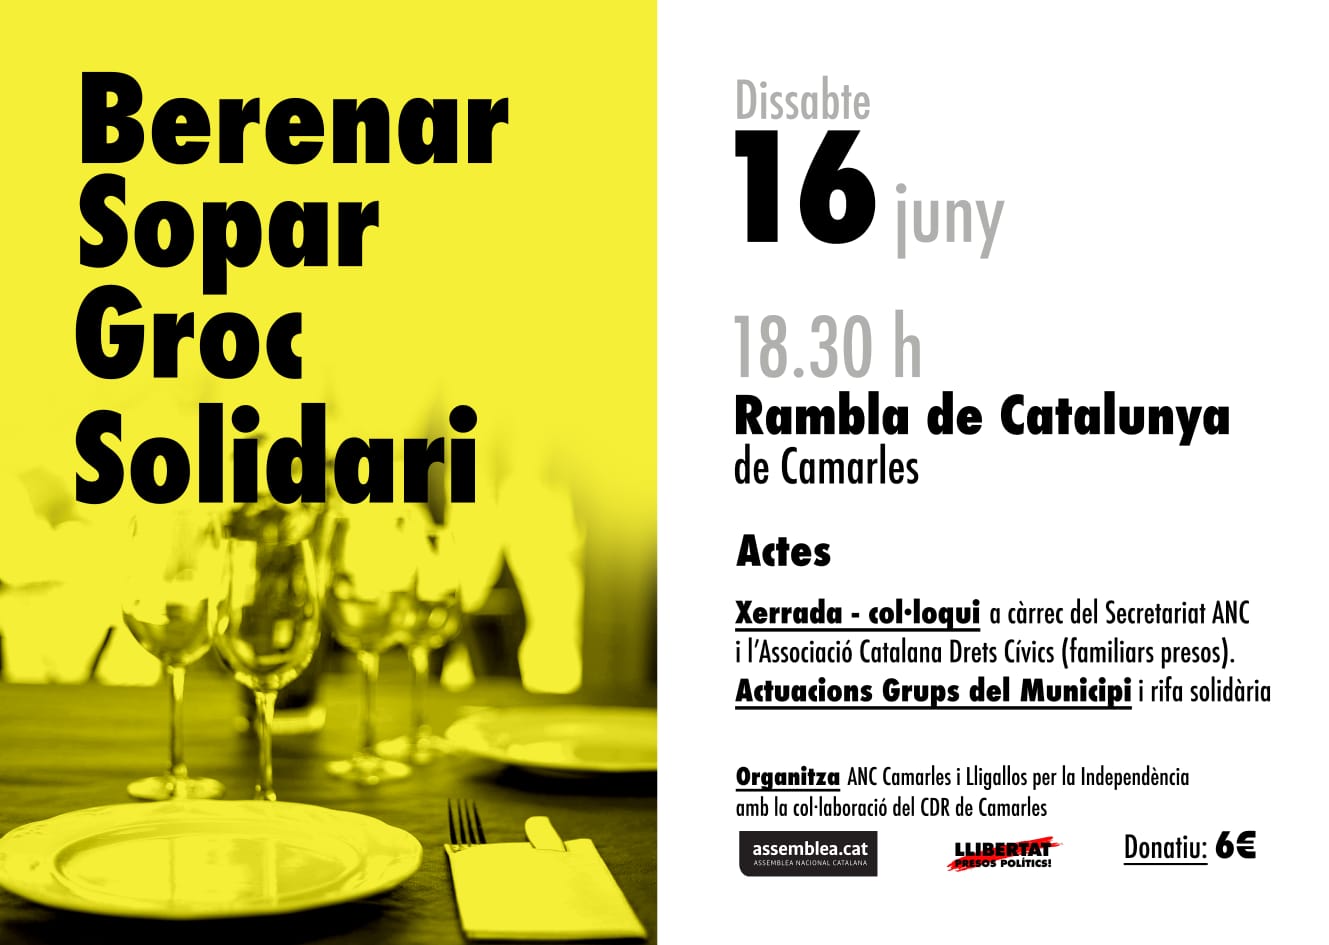 Camarles - Berenar i sopar groc solidari